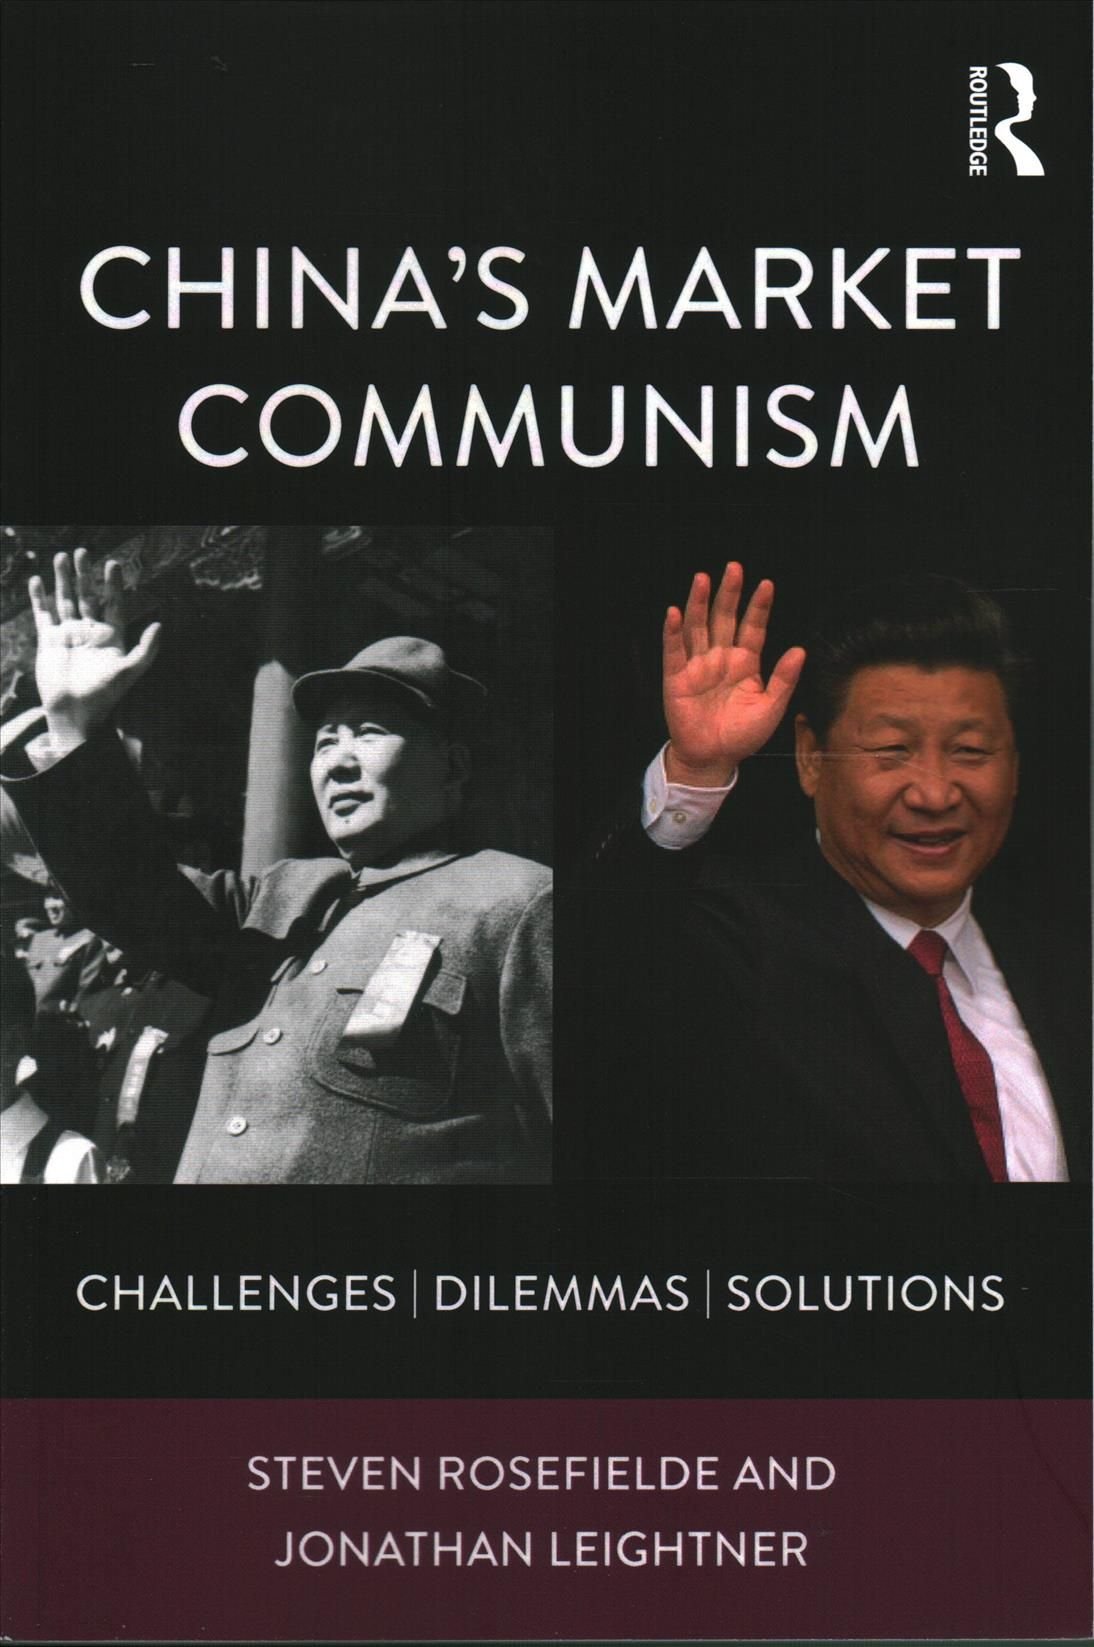 China's Market Communism